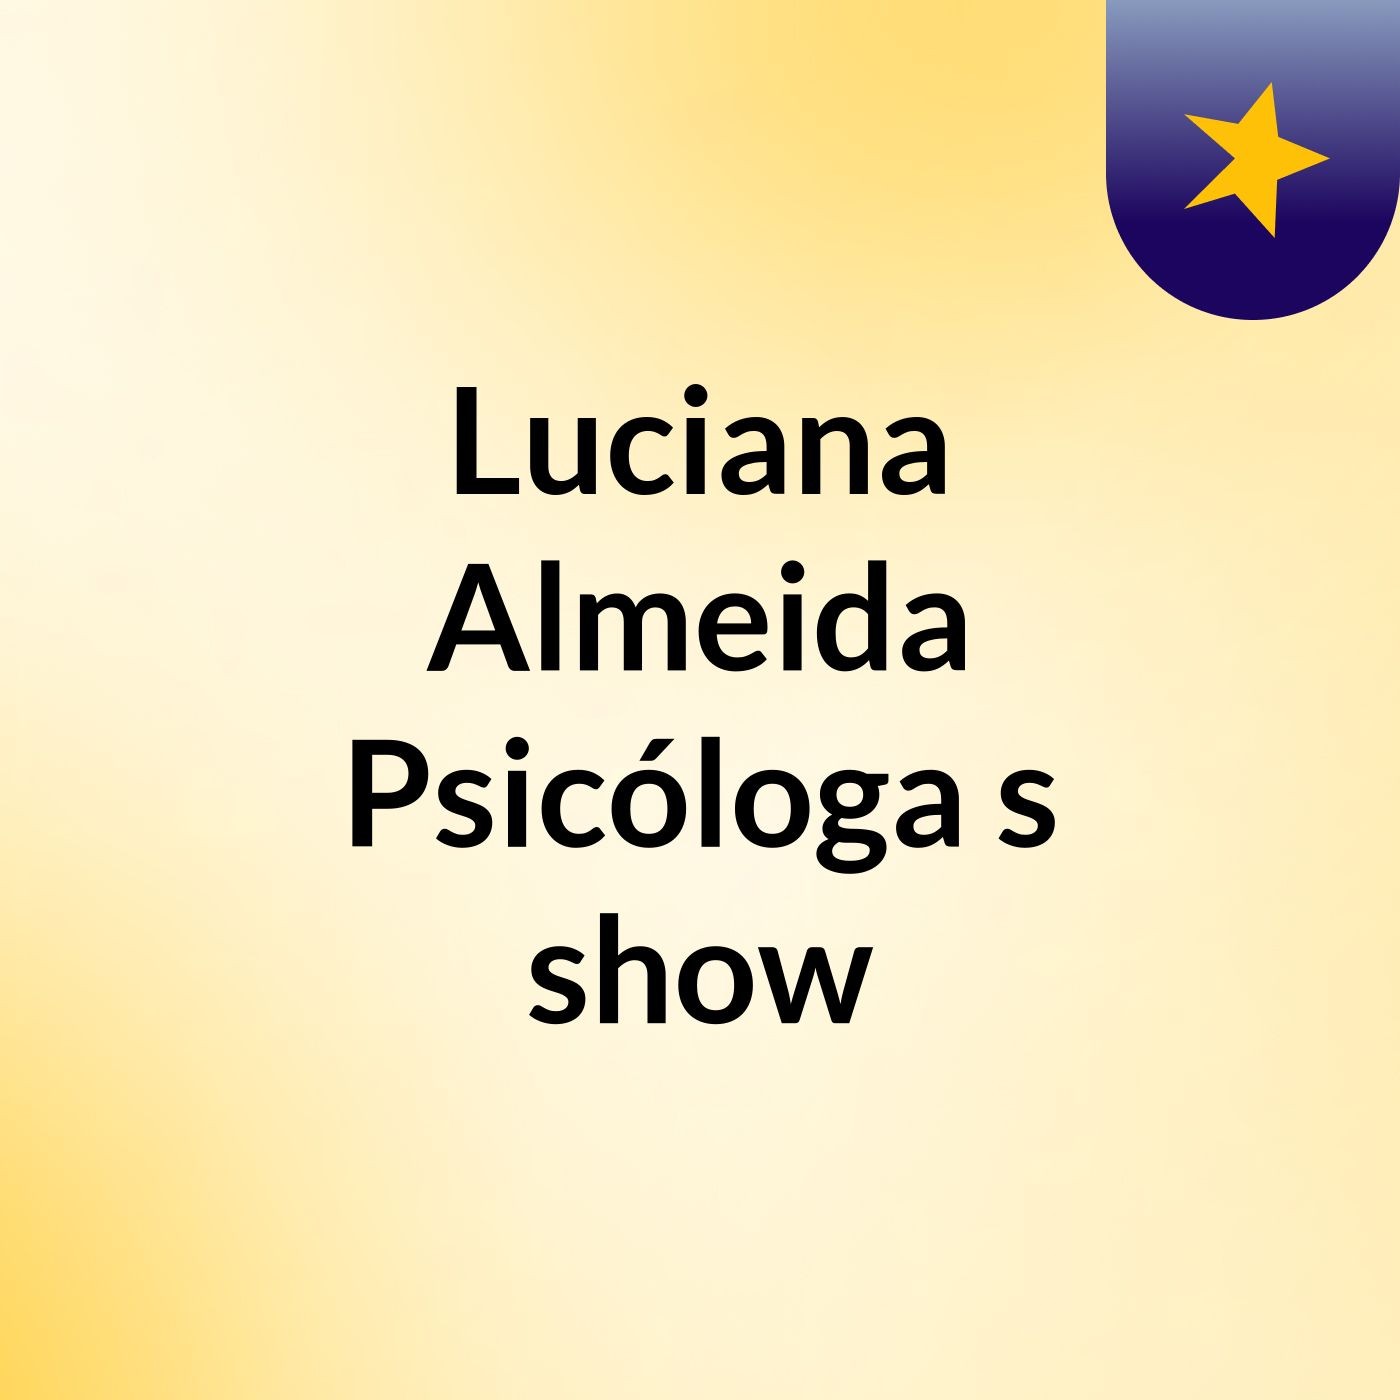 Luciana Almeida Psicóloga's show